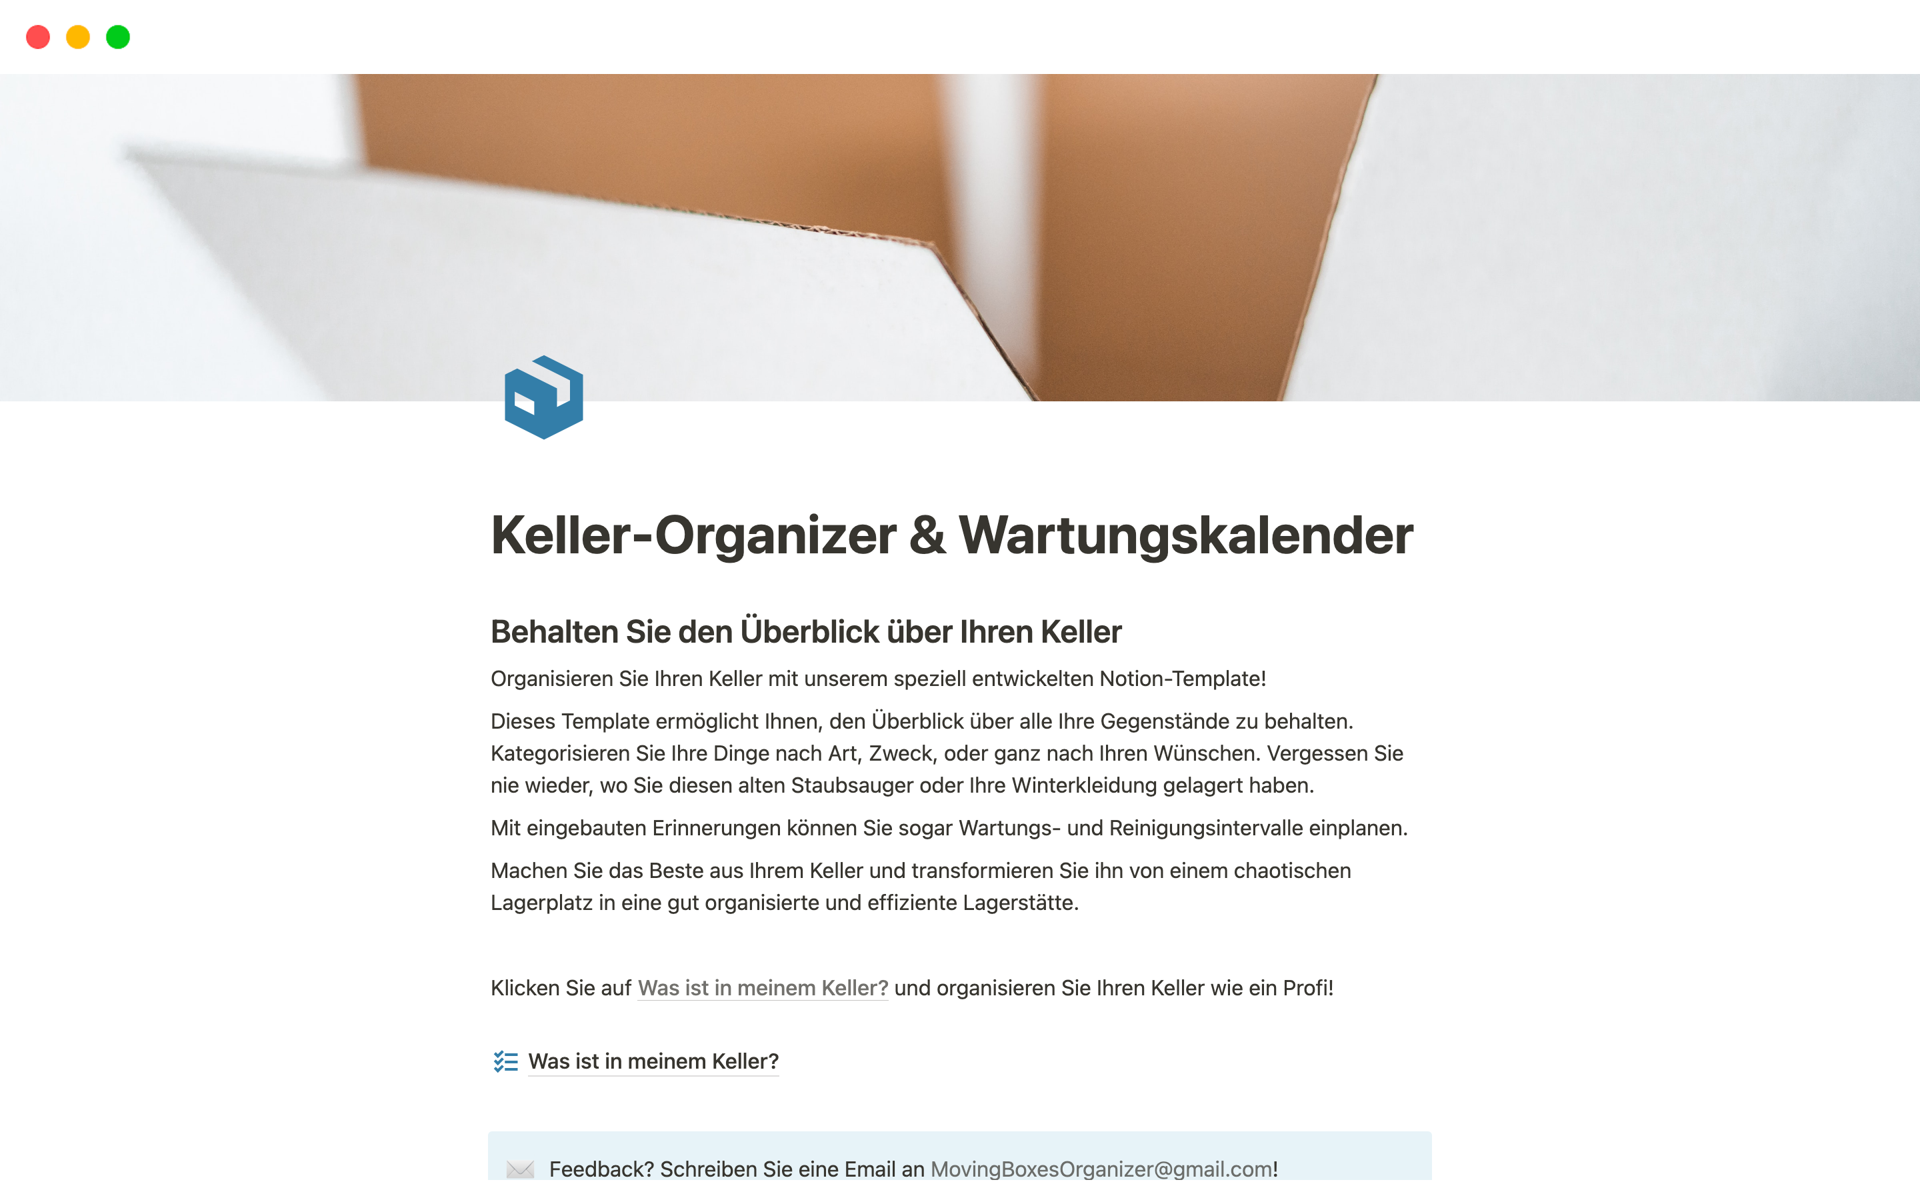 Vista previa de plantilla para Keller-Organizer & Wartungskalender